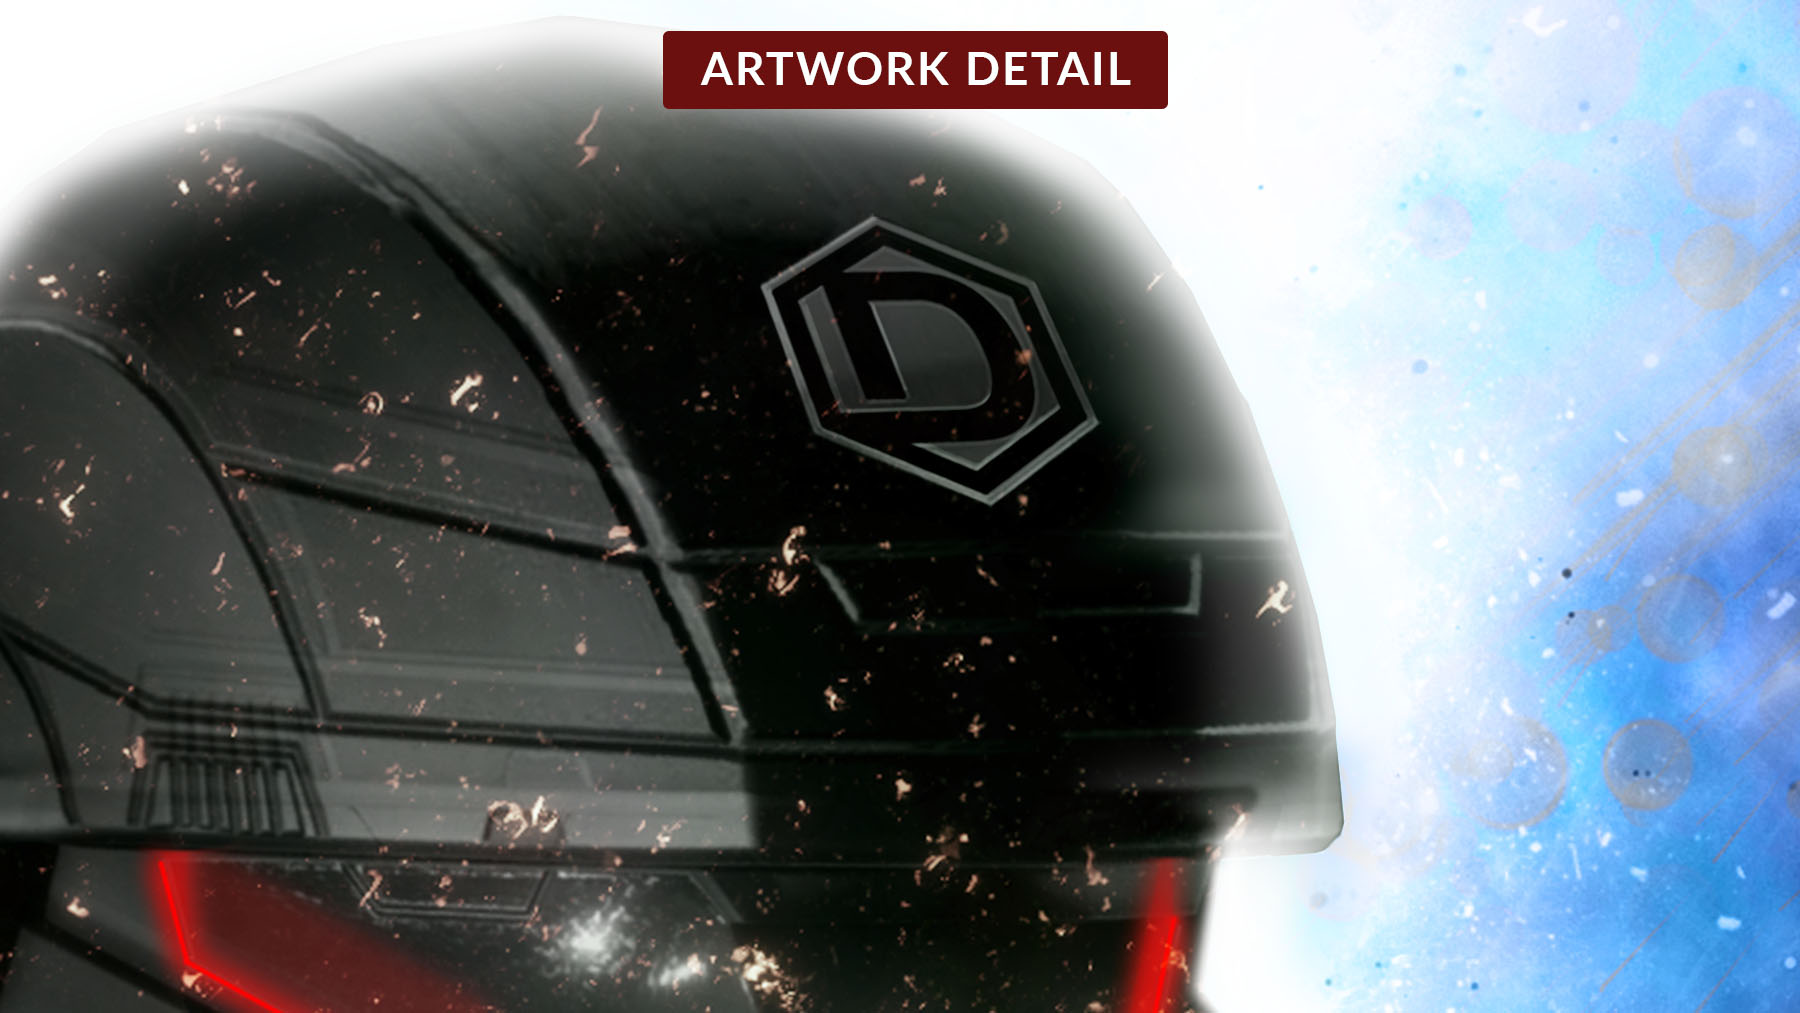 Detailed close-up of the ranger's helmet reveals the DomiForce emblem from the DomiForce Ranger (3rd Gen) NFT artwork